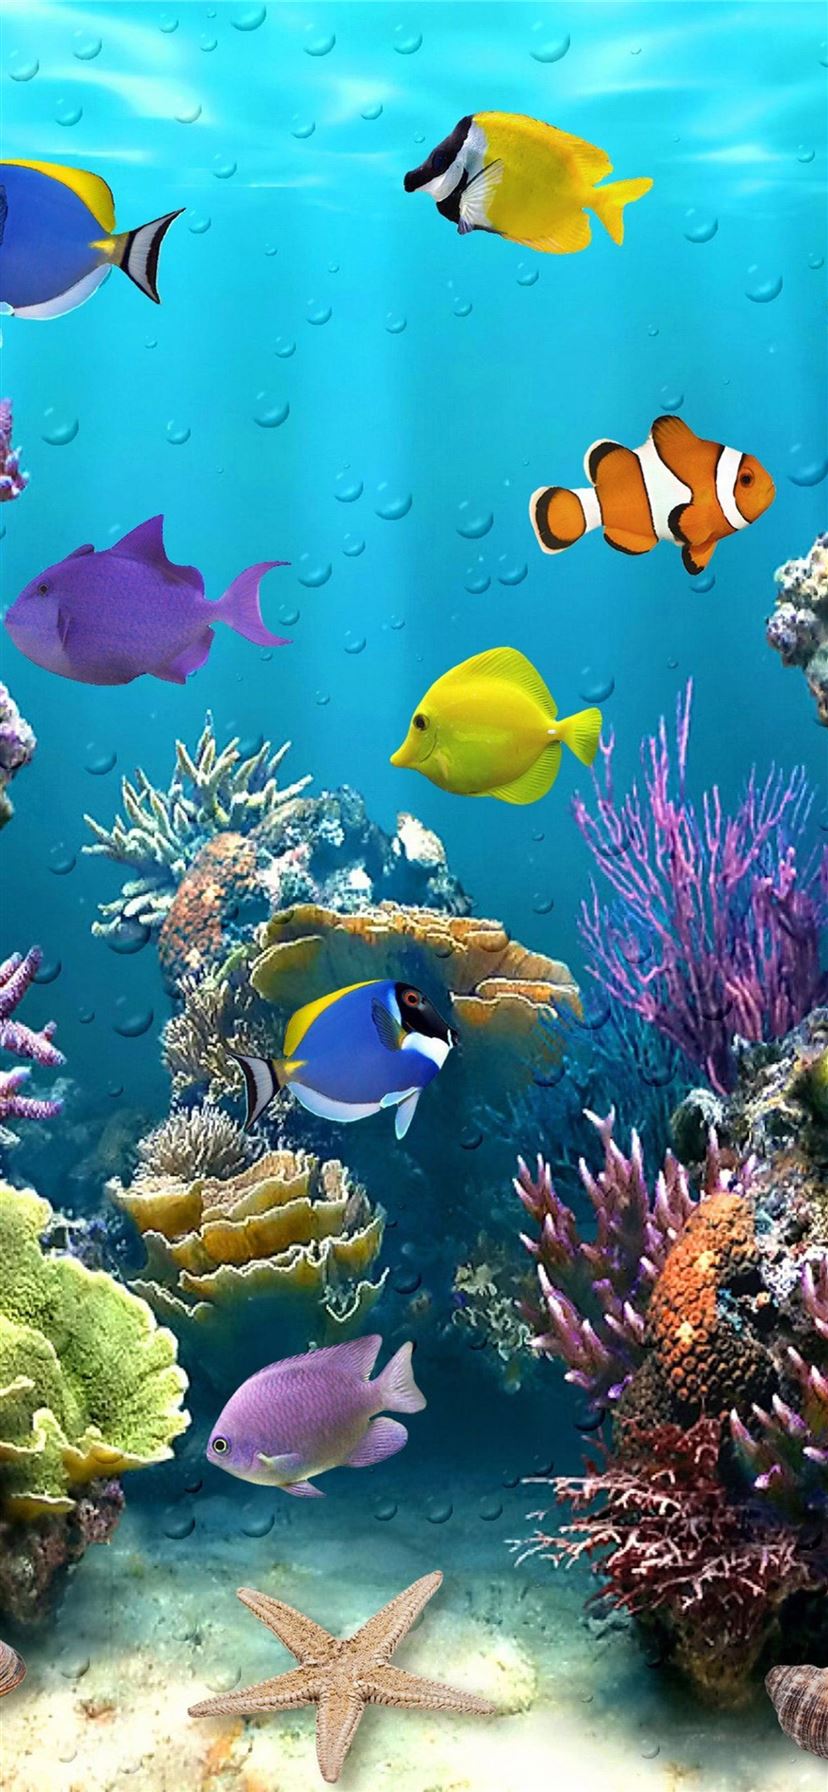 aquarium iPhone Wallpapers Free Download